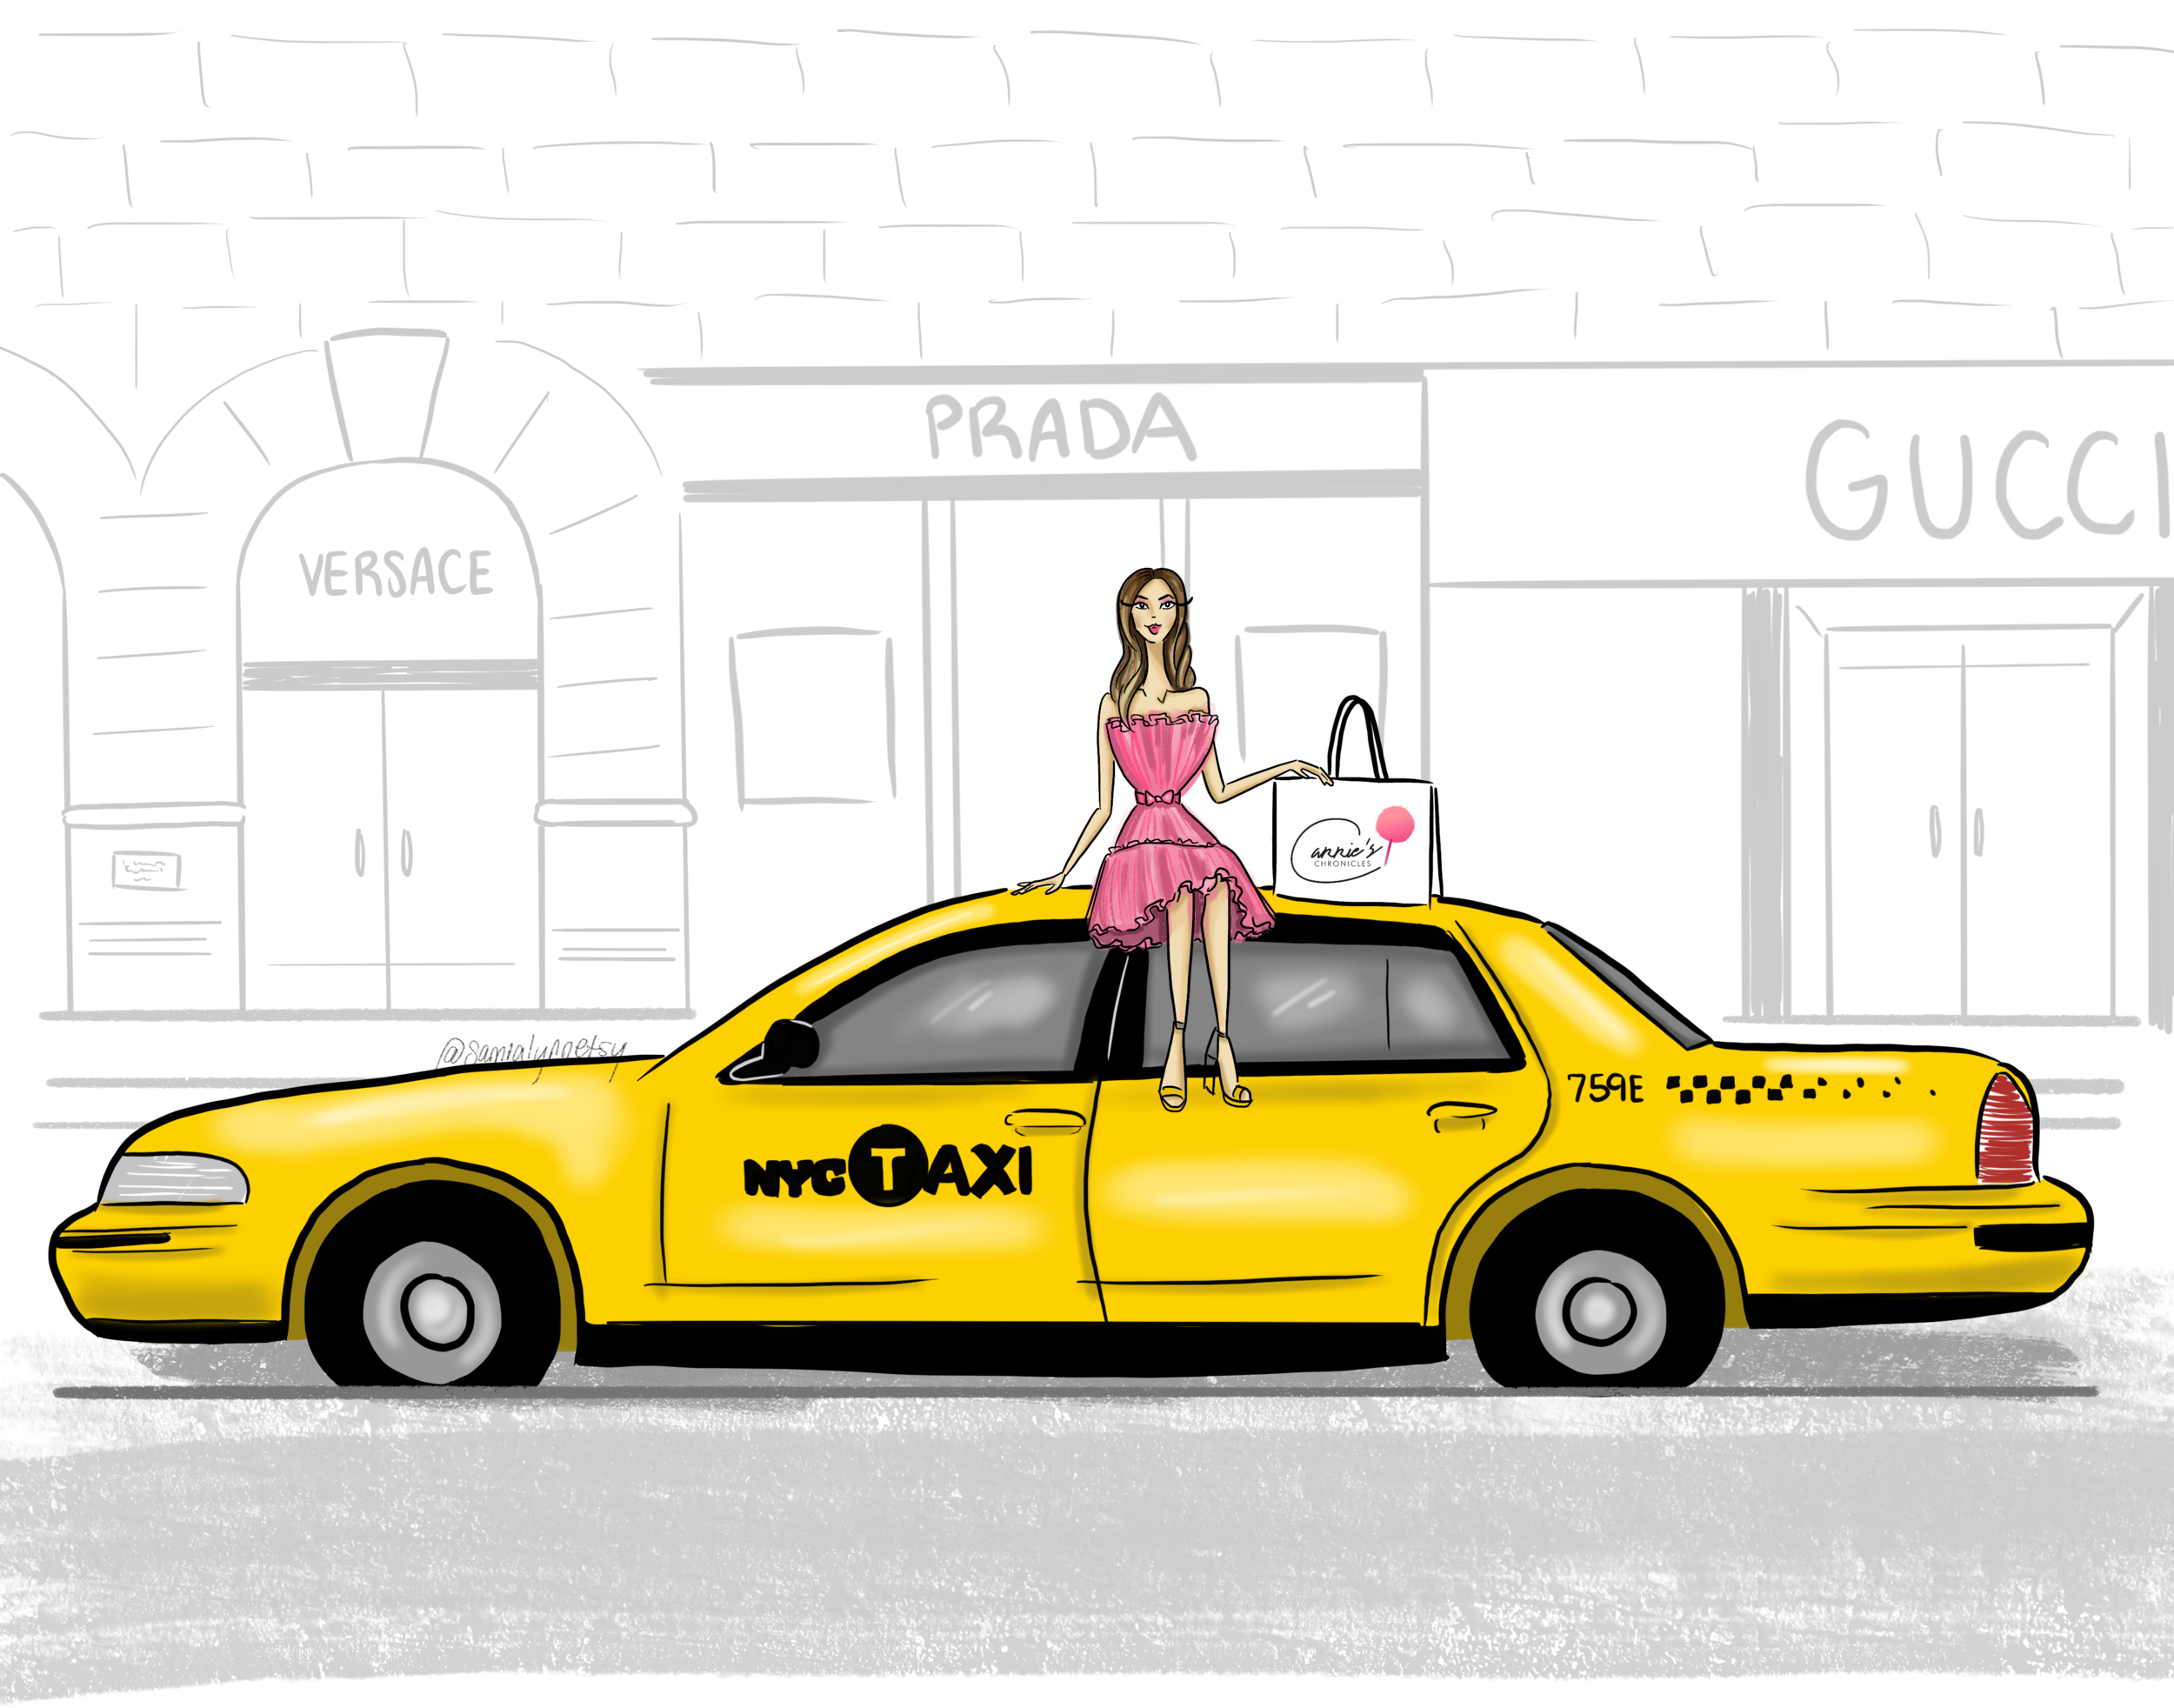 nyc taxi illustration